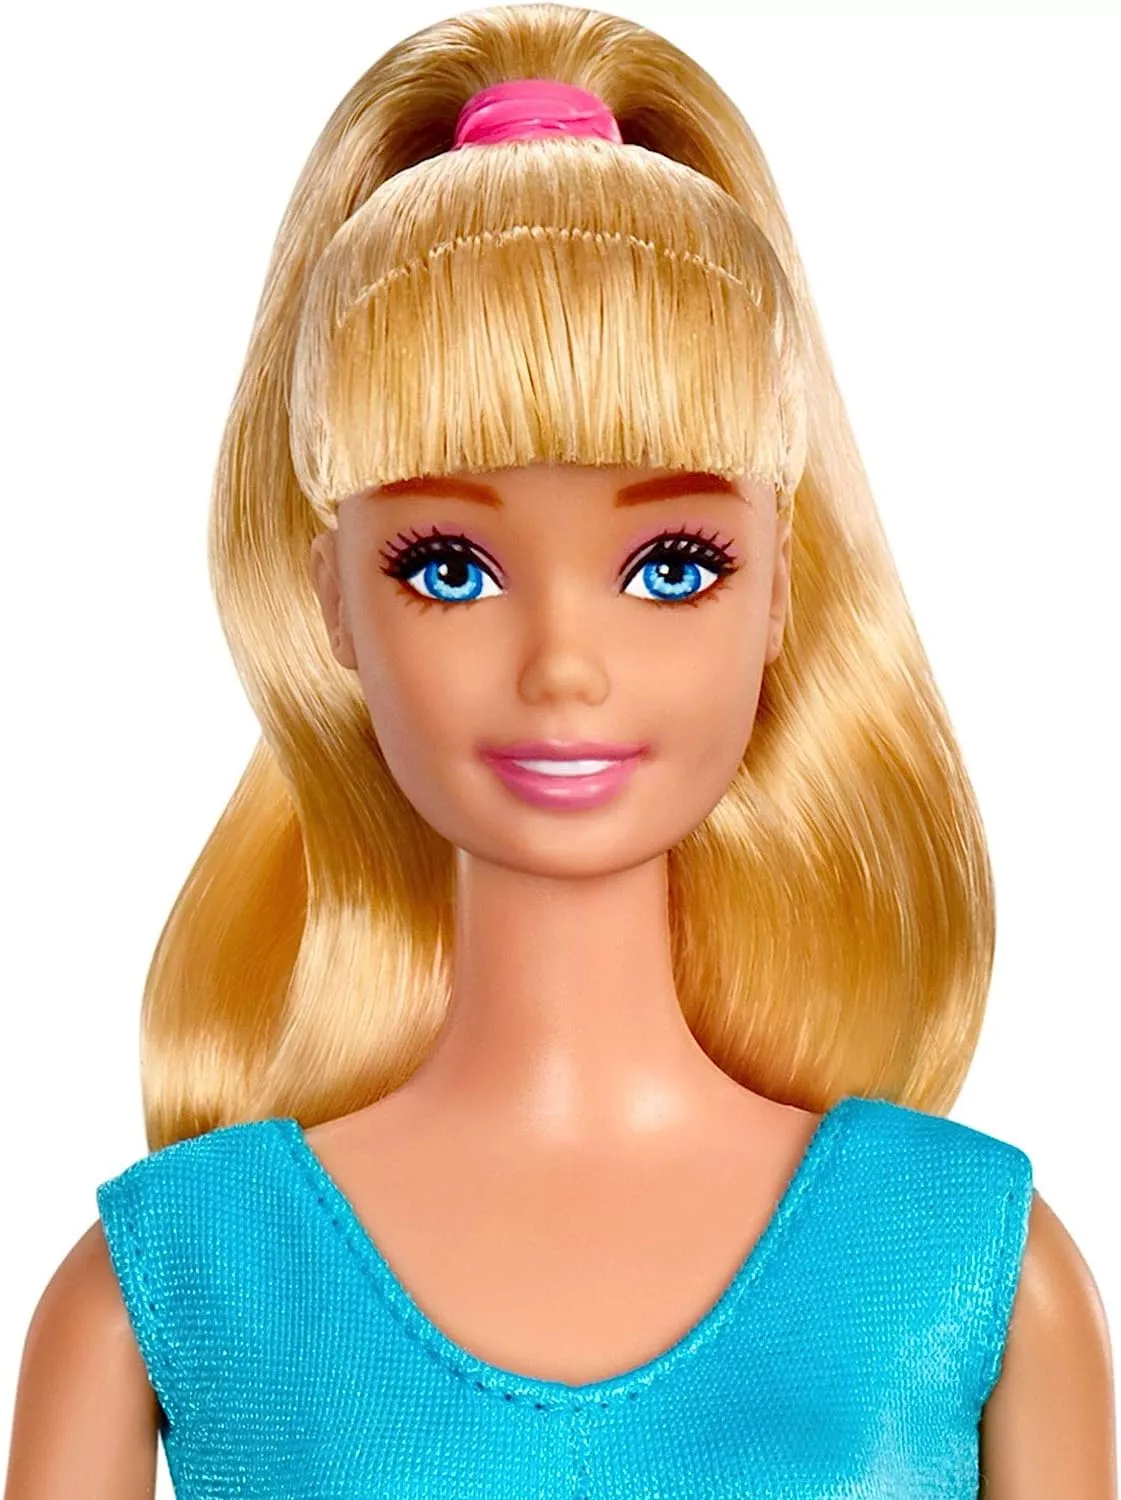 Barbie Signature - Toy Story 4 Puppe GFL78